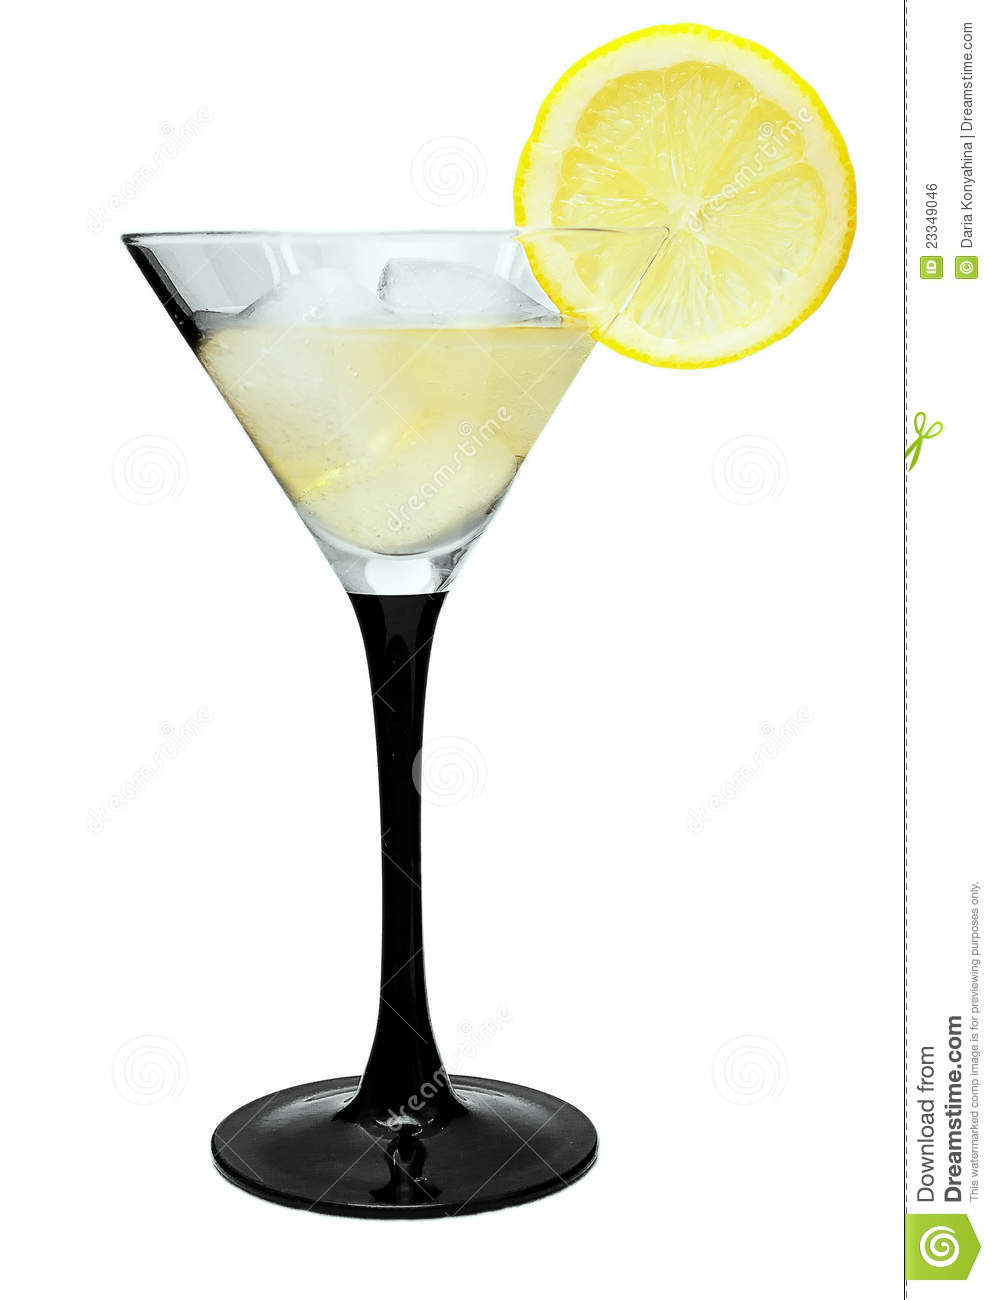 Martini With Lemon And Ice Royalty Free Stock Image   Image  23349046